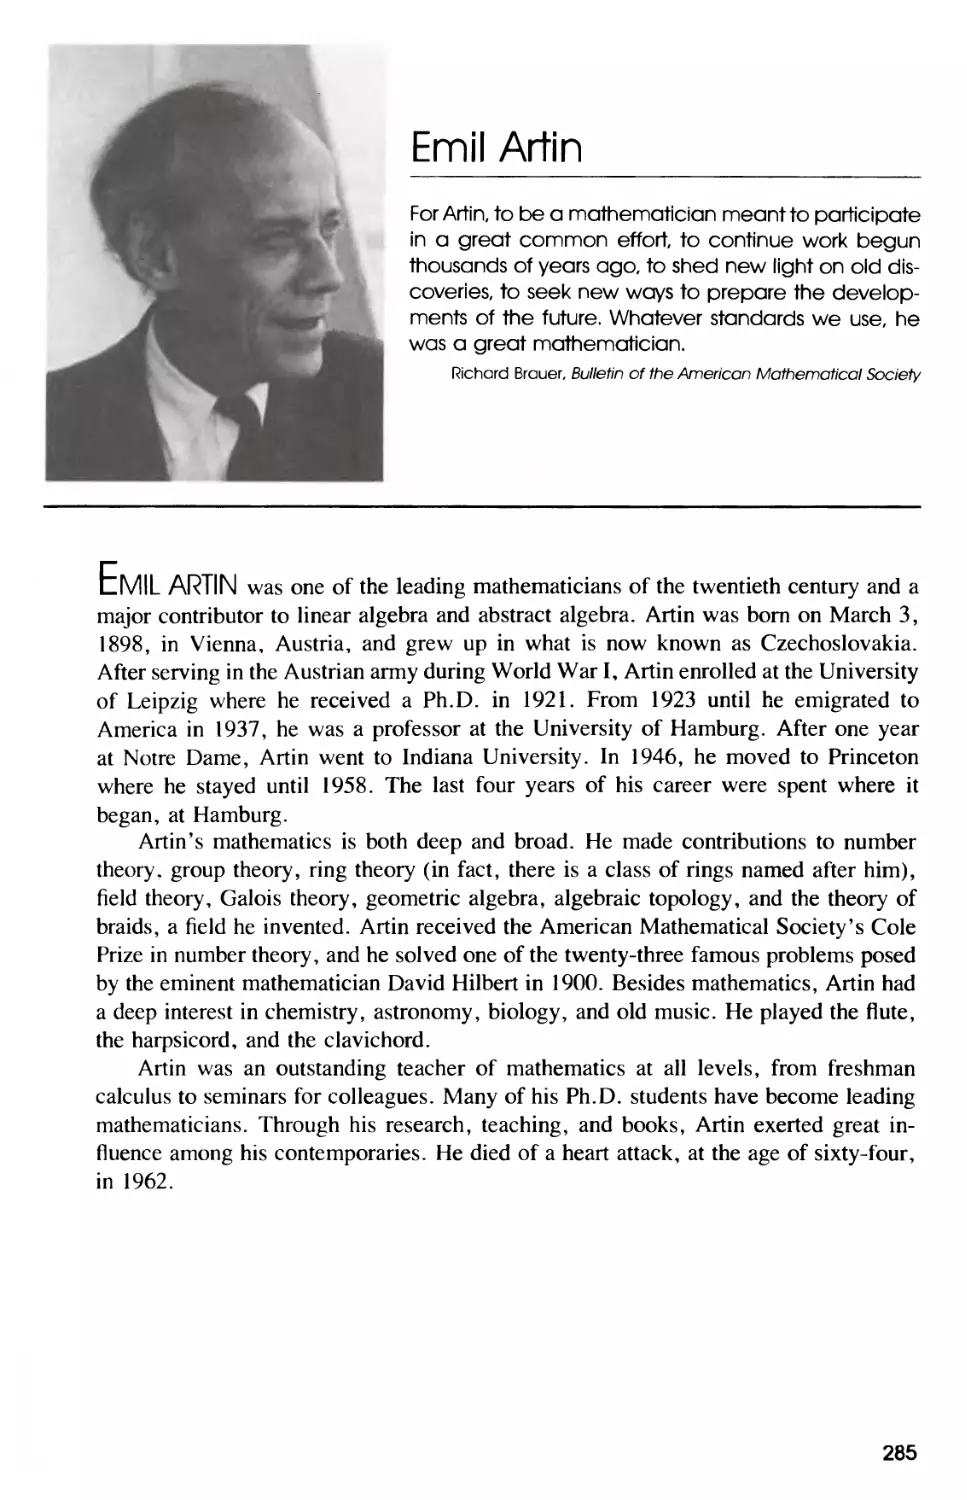 Biography of Emil Artin